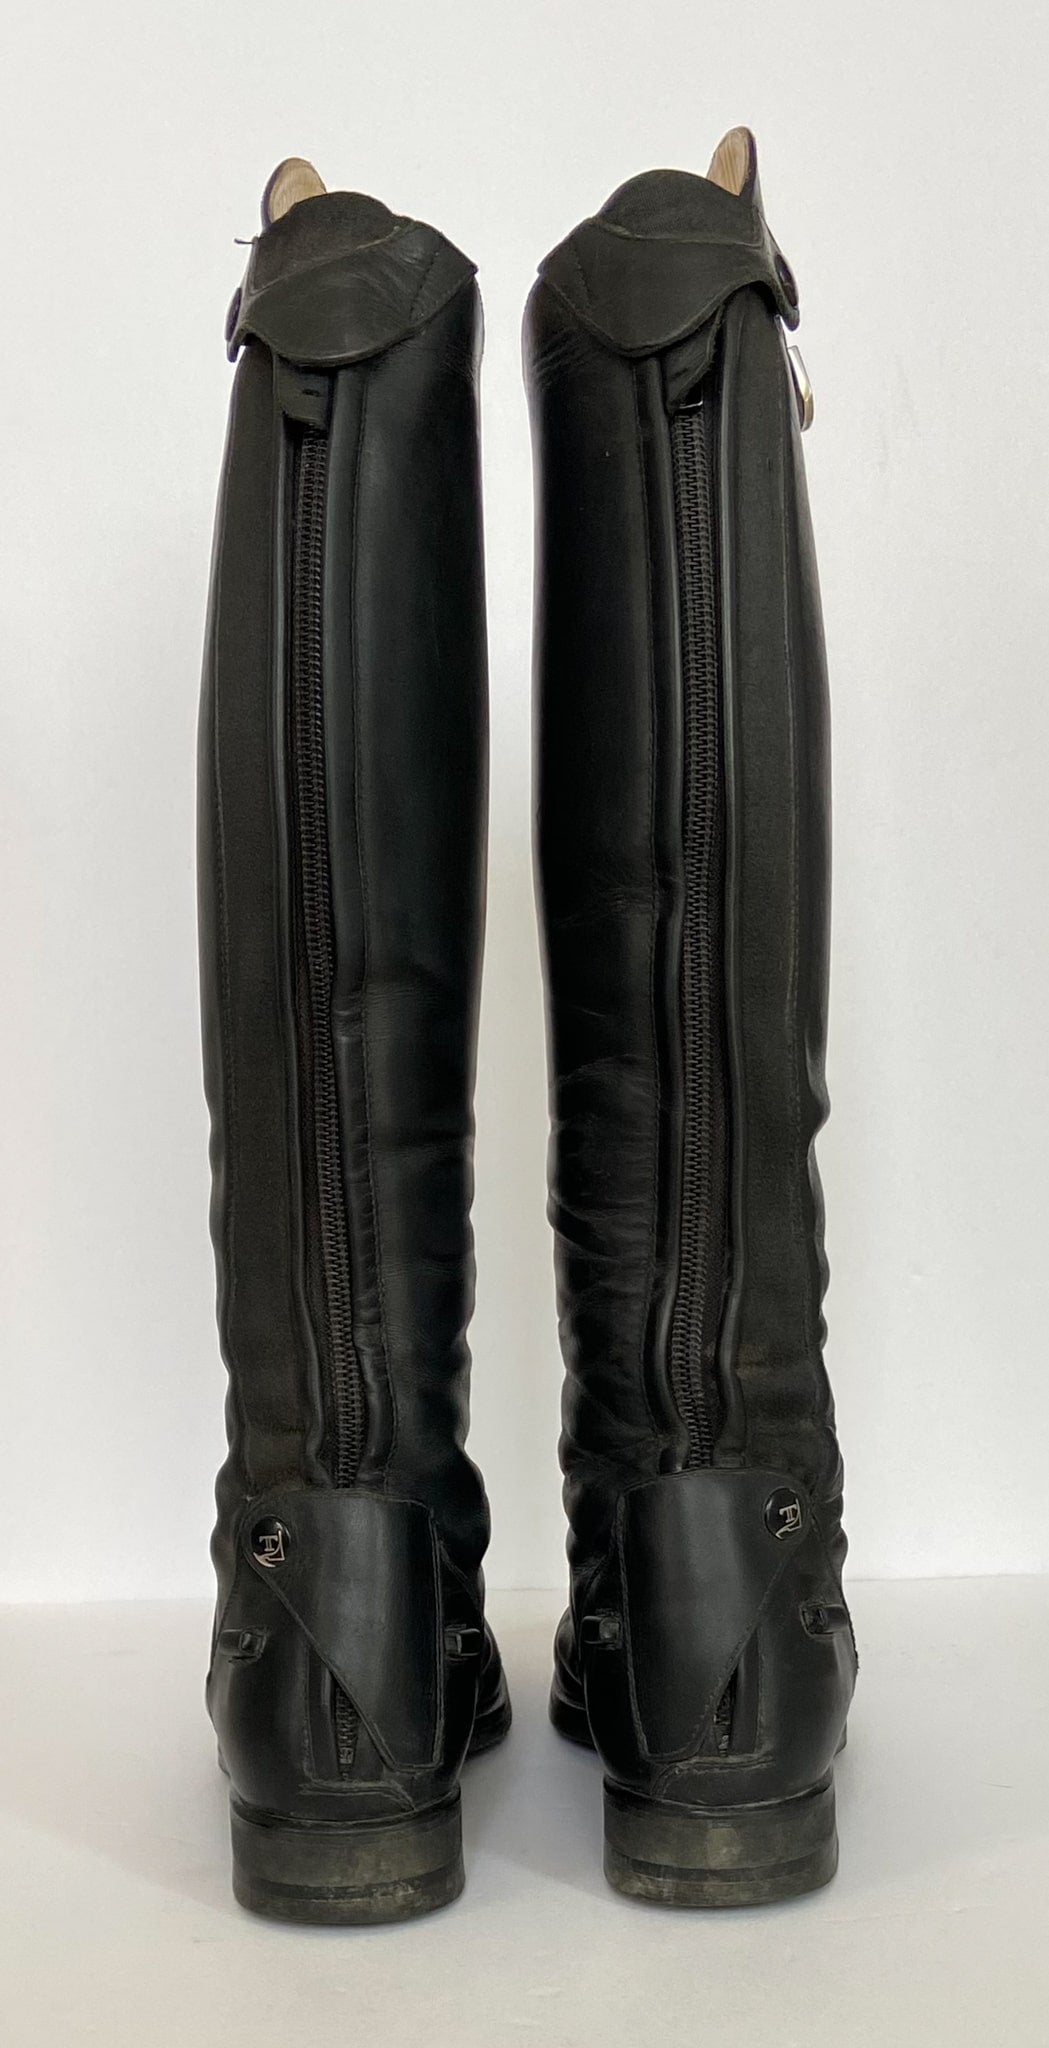 Tucci Galileo Field Boots - Black - Women's Size 36D